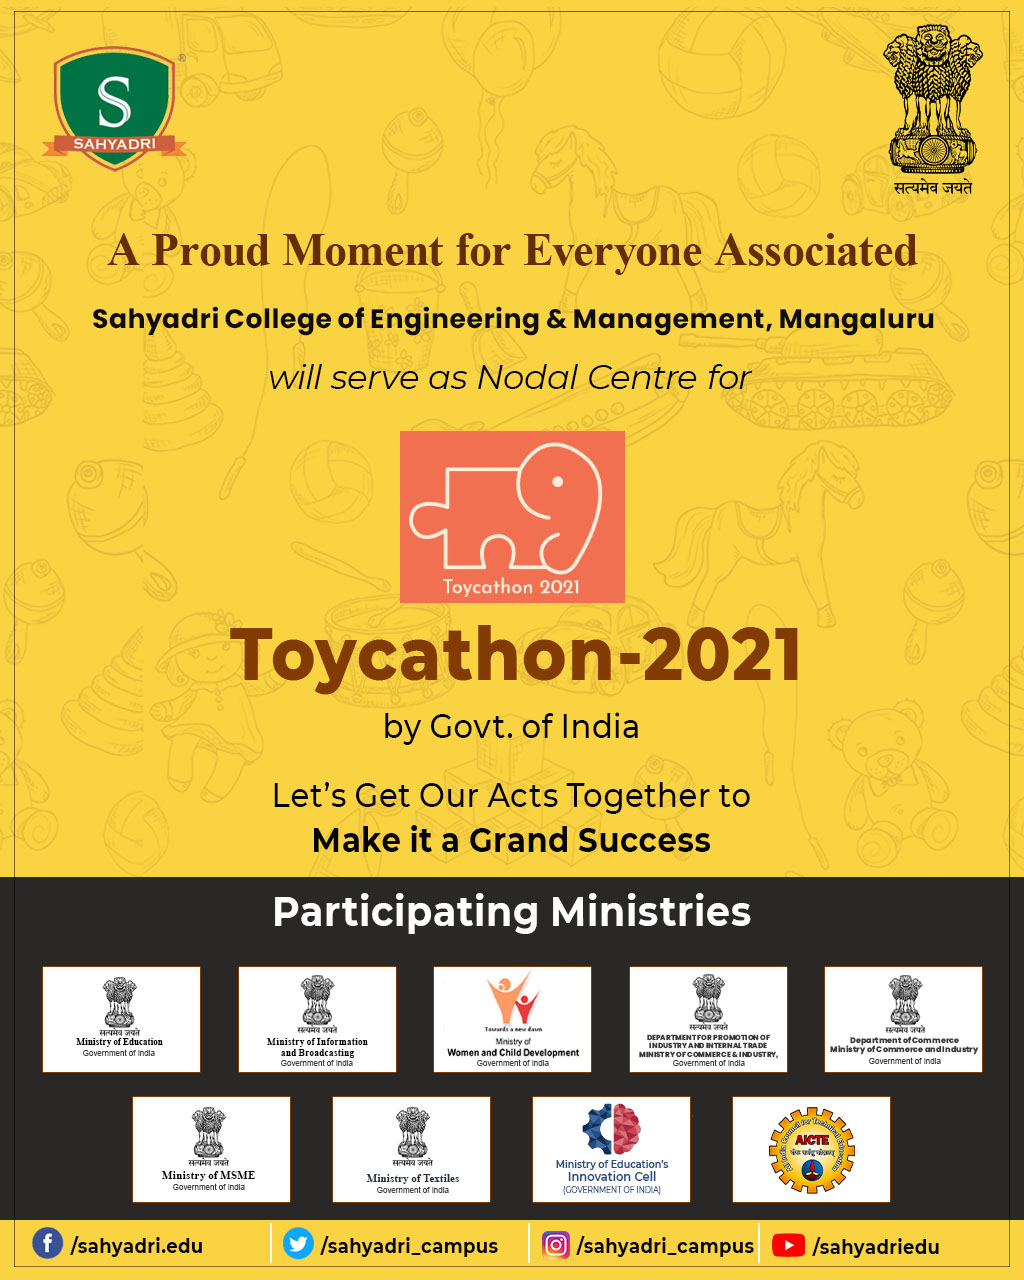 Sahyadri, the Official Nodal Centre of Toycathon-2021 